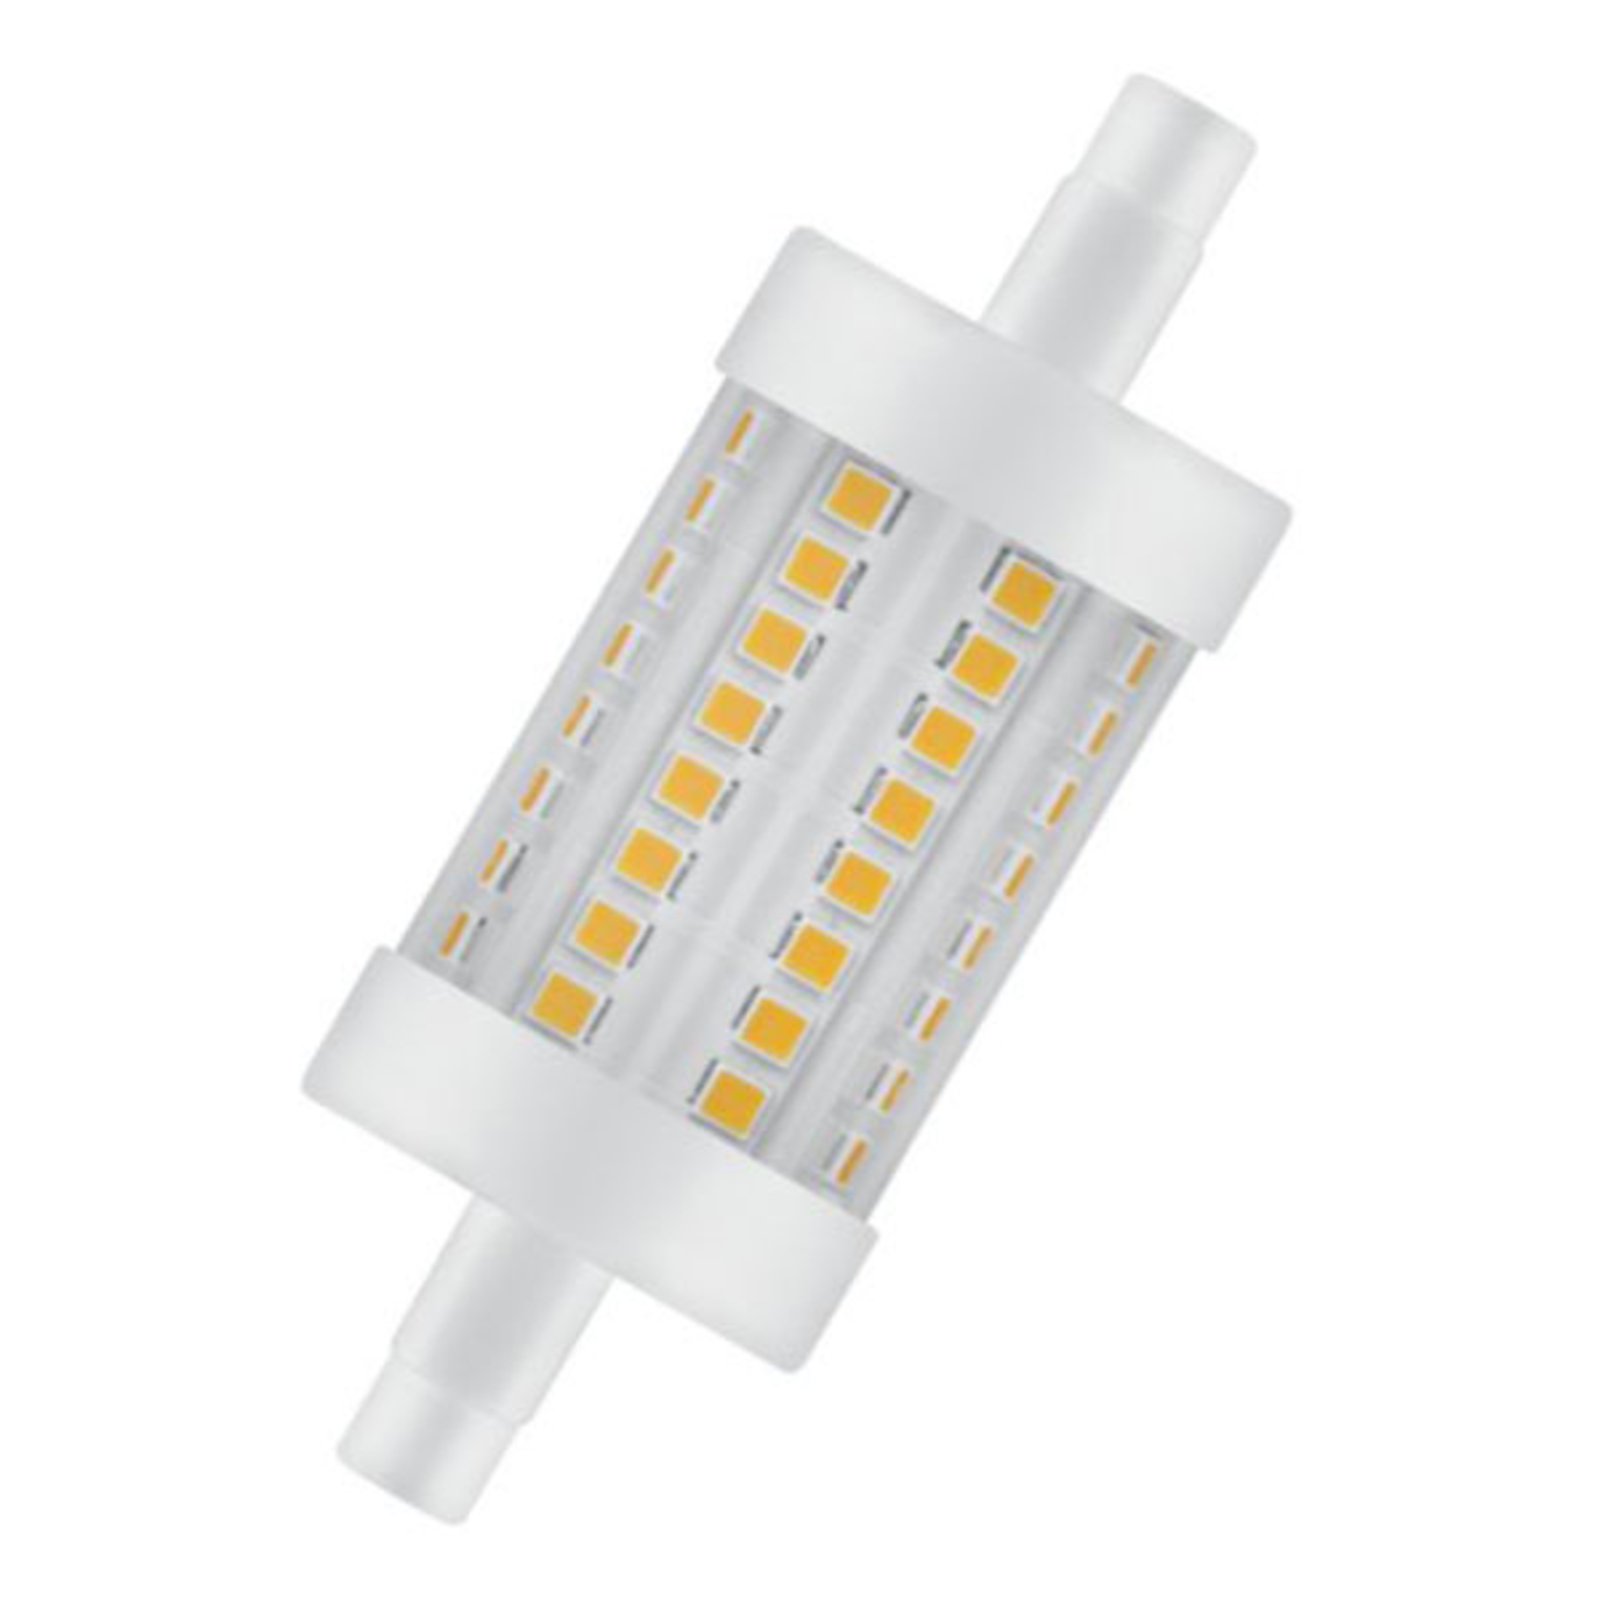 OSRAM LED žárovka R7s 6,5W 2 700 K